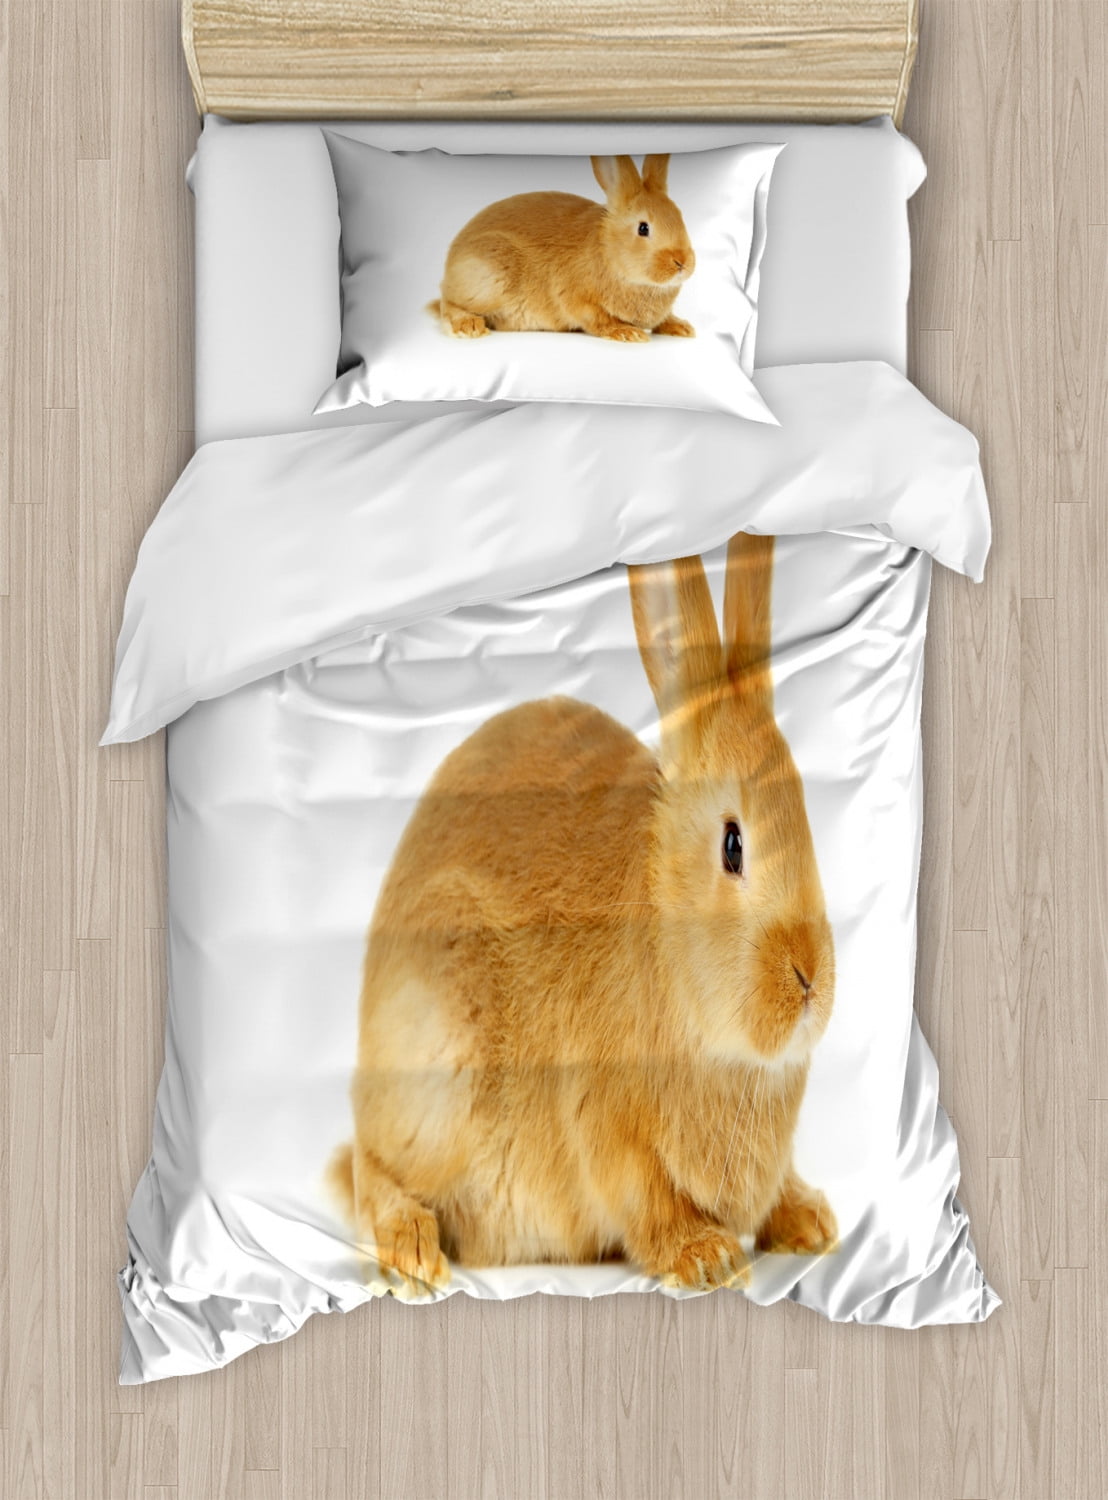 Bunny Duvet Cover Set, Fluffy Rabbit Sitting on a White Background ...